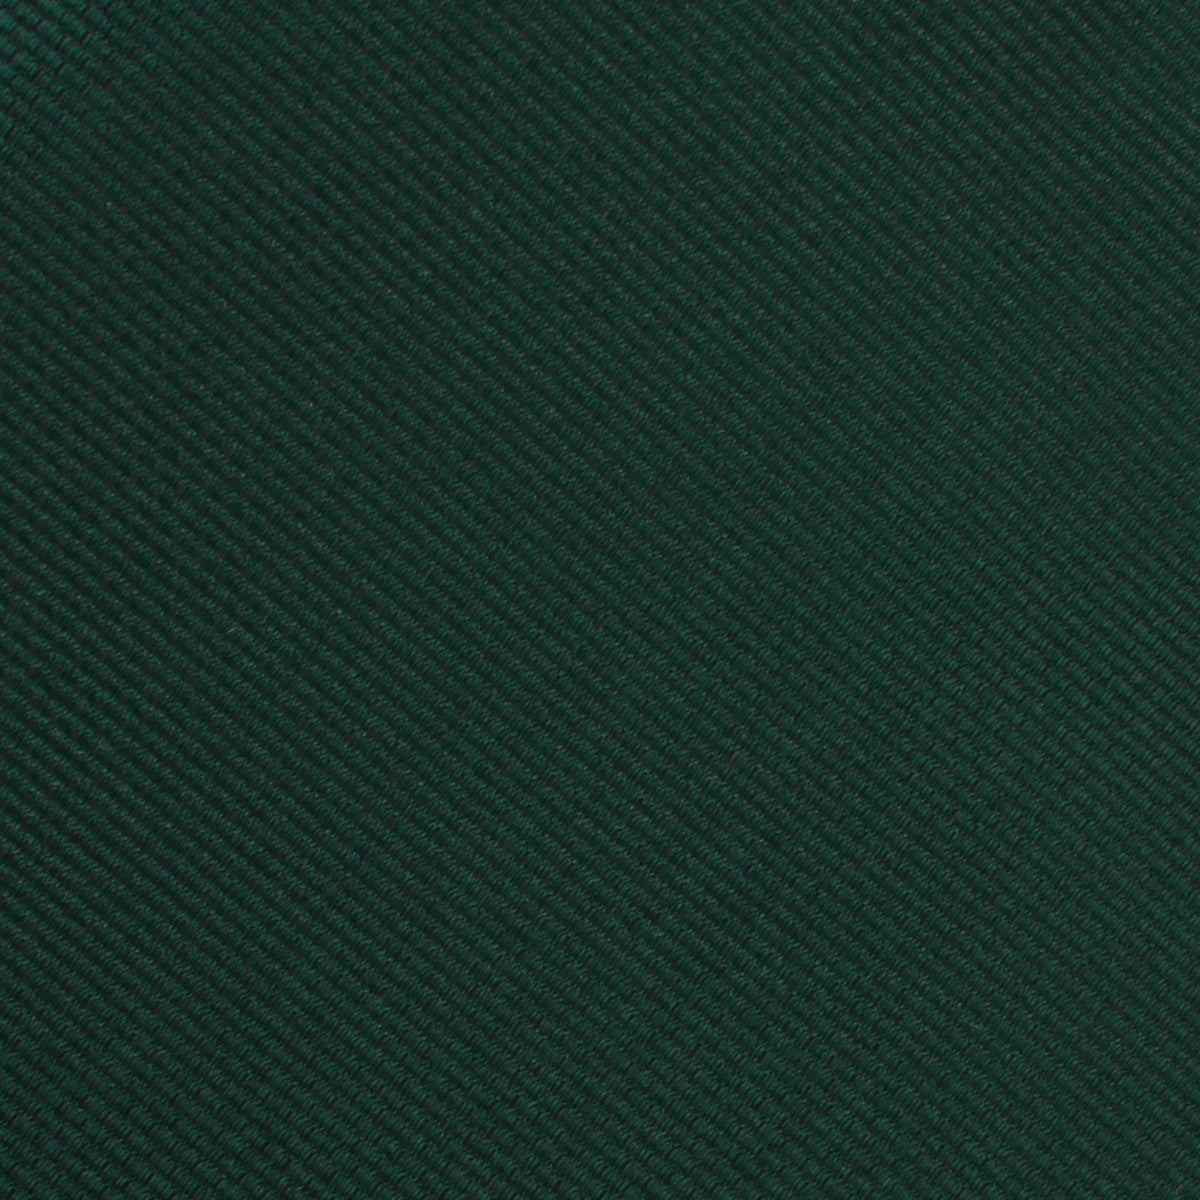 Dark Green Weave Pocket Square Fabric